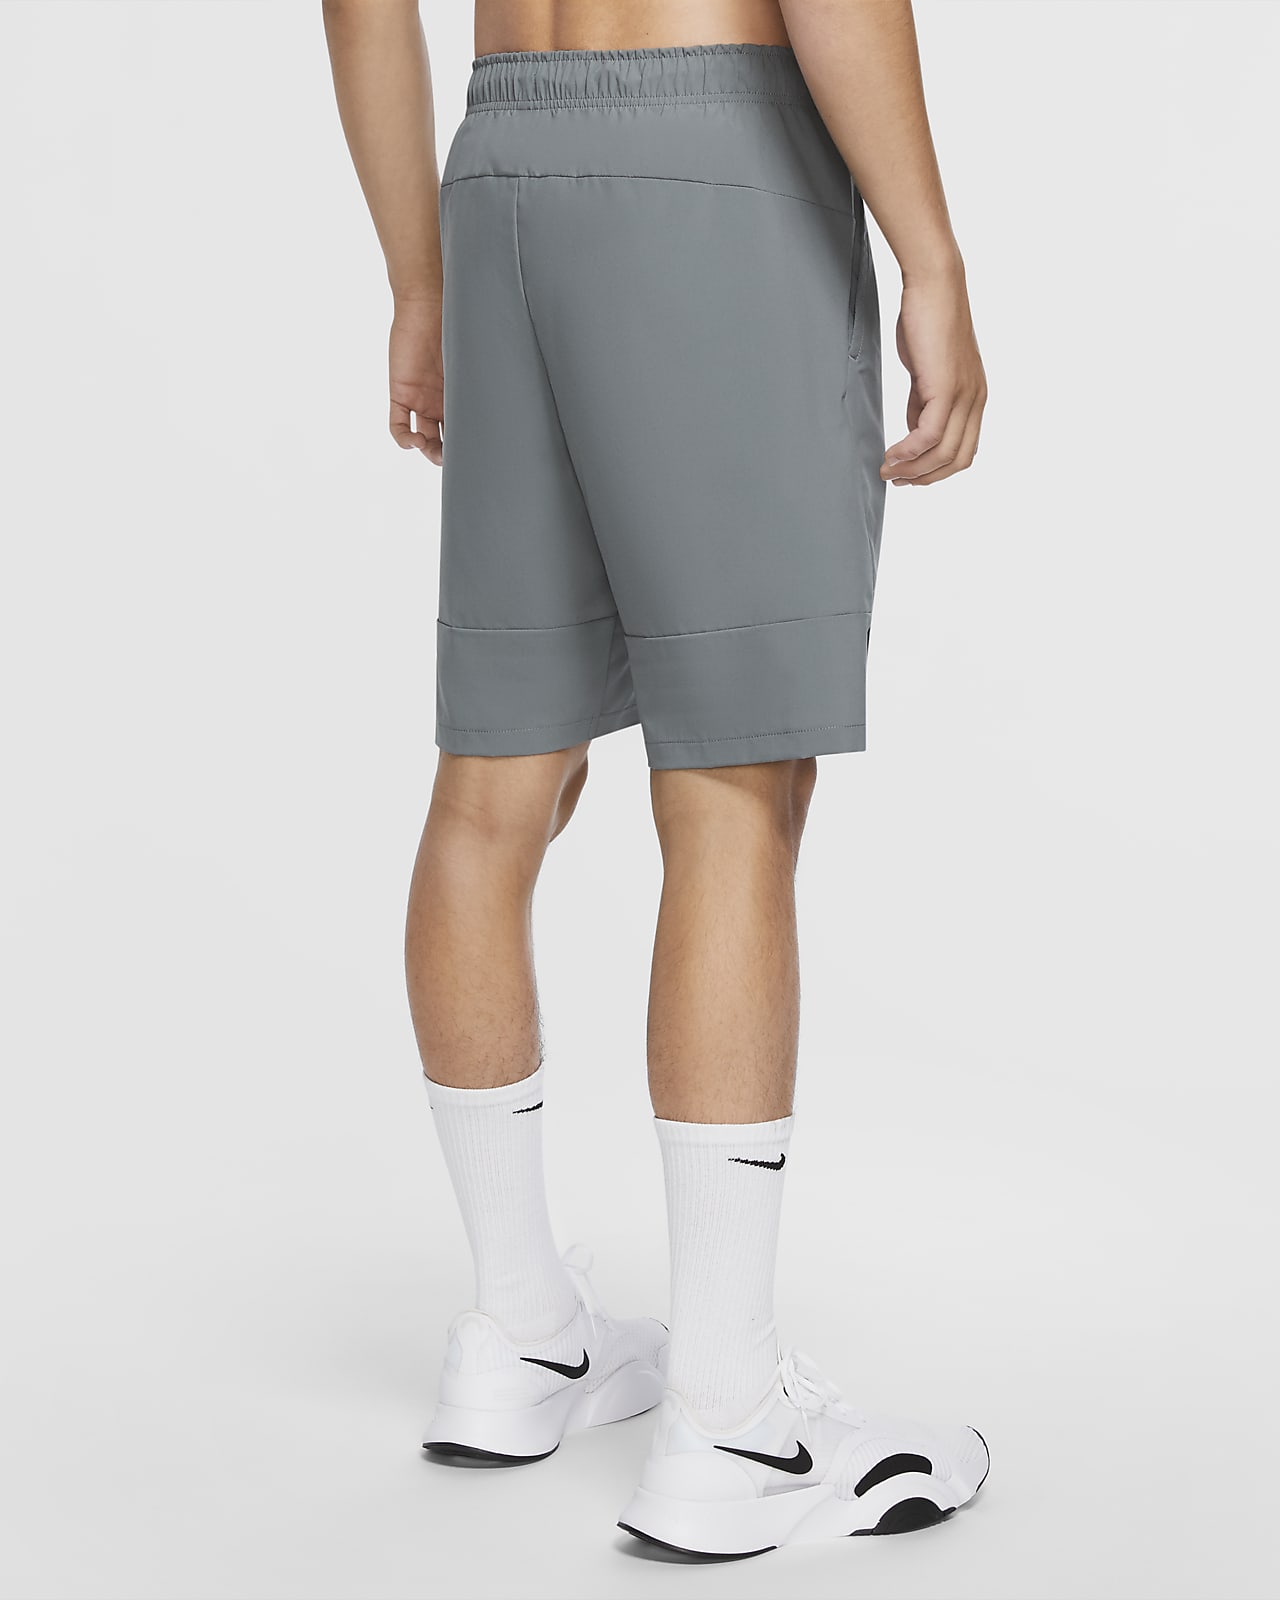 Quần Shorts - NIKE Flex Men's Woven Training Grey